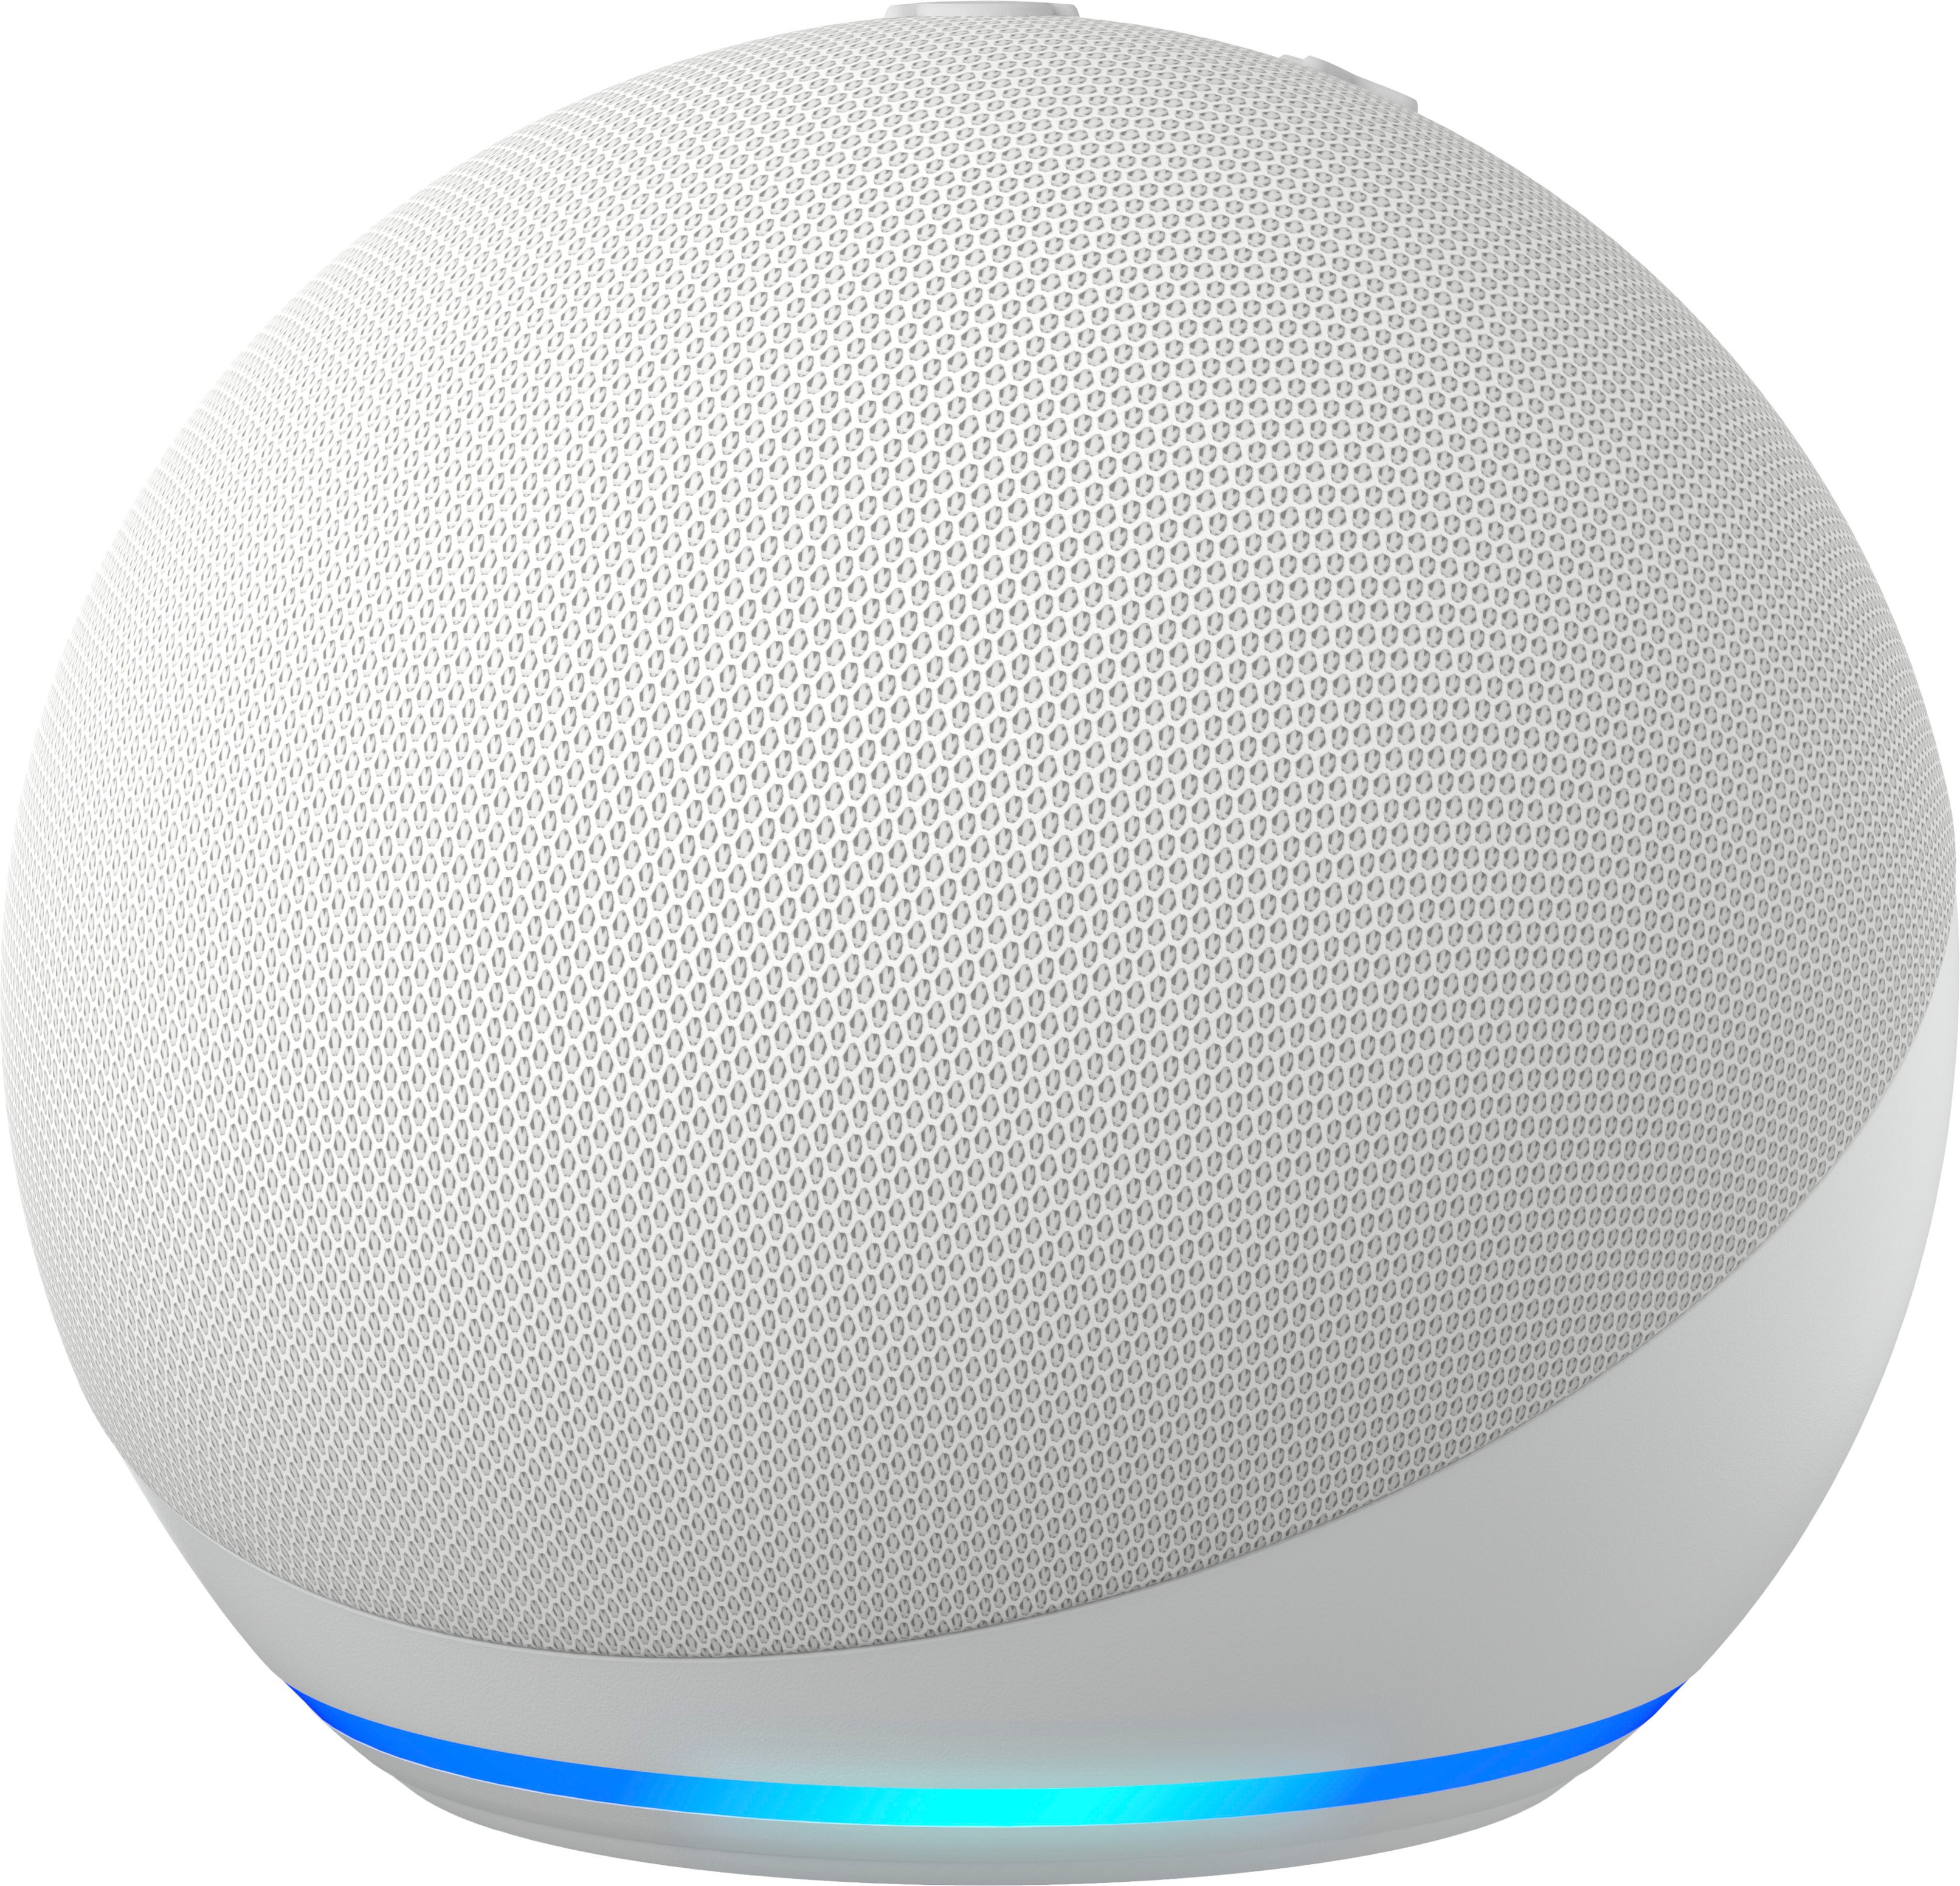 Alexa Echo Dot Quiz Answers: Win All-New Echo Dot 5th Gen